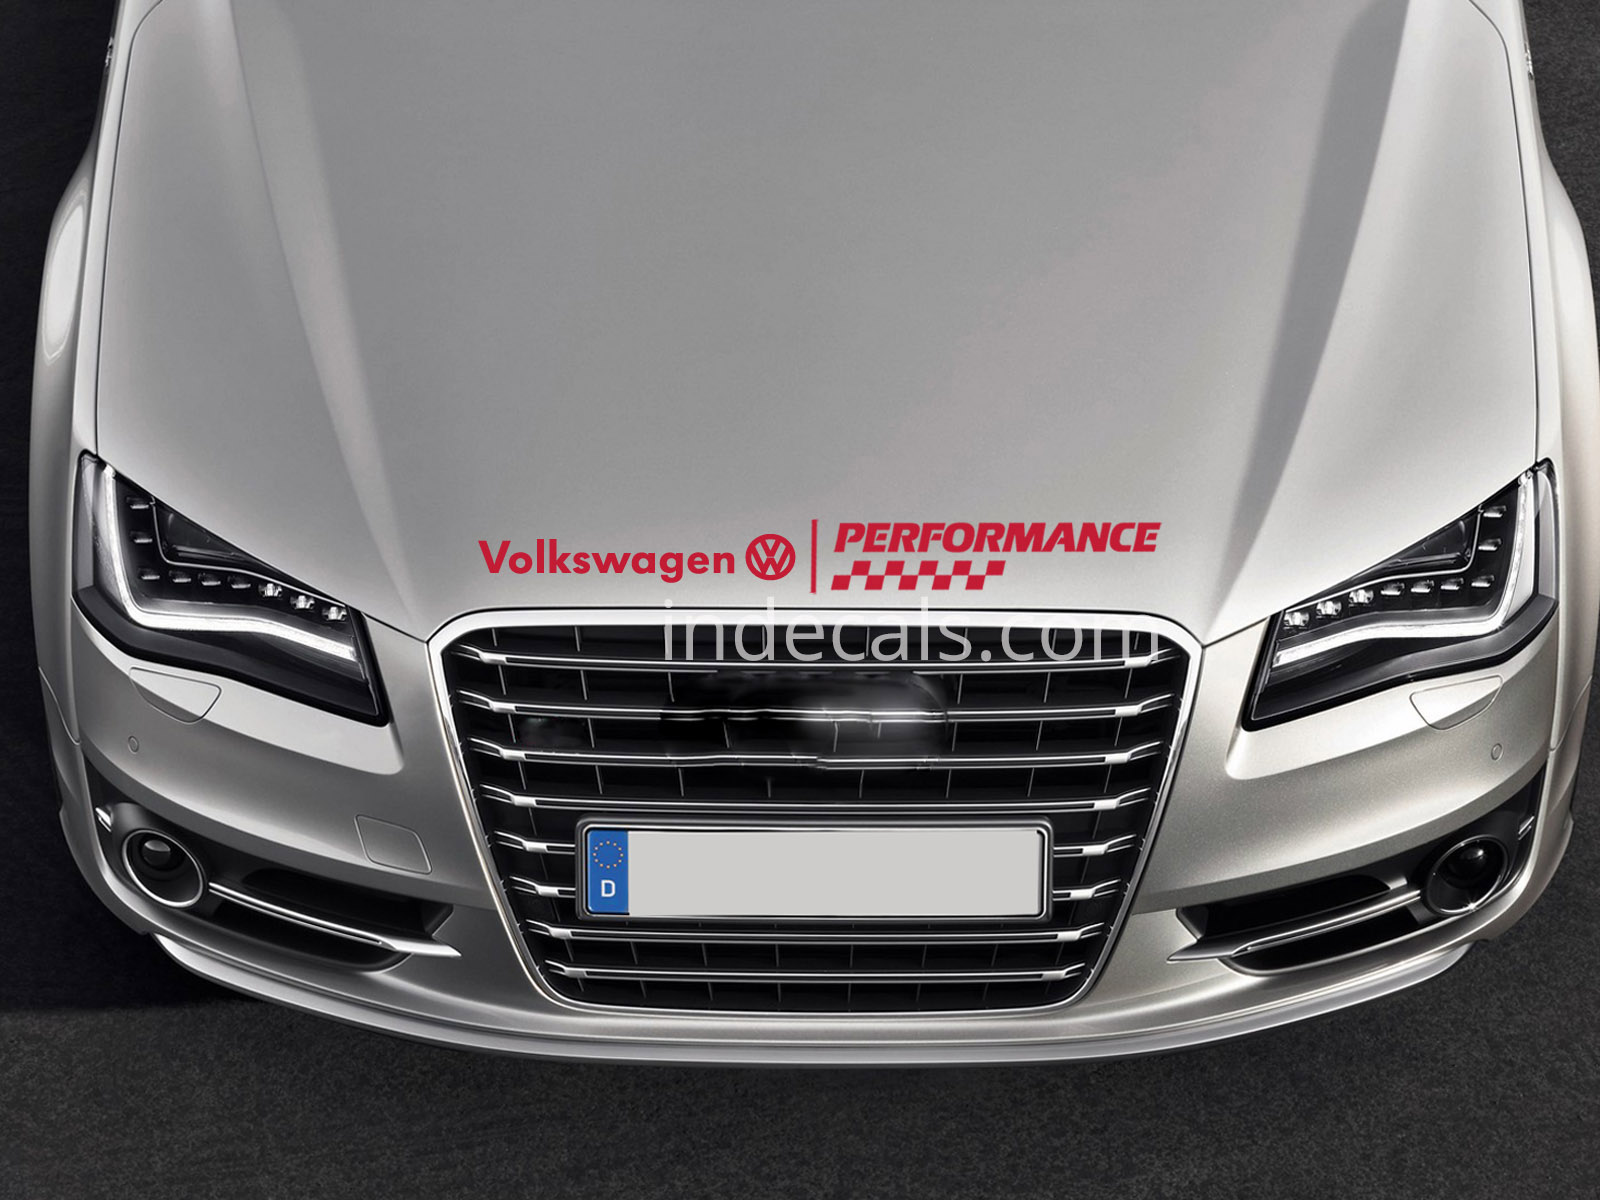 1 x Volkswagen Performance Sticker for Bonnet - Red